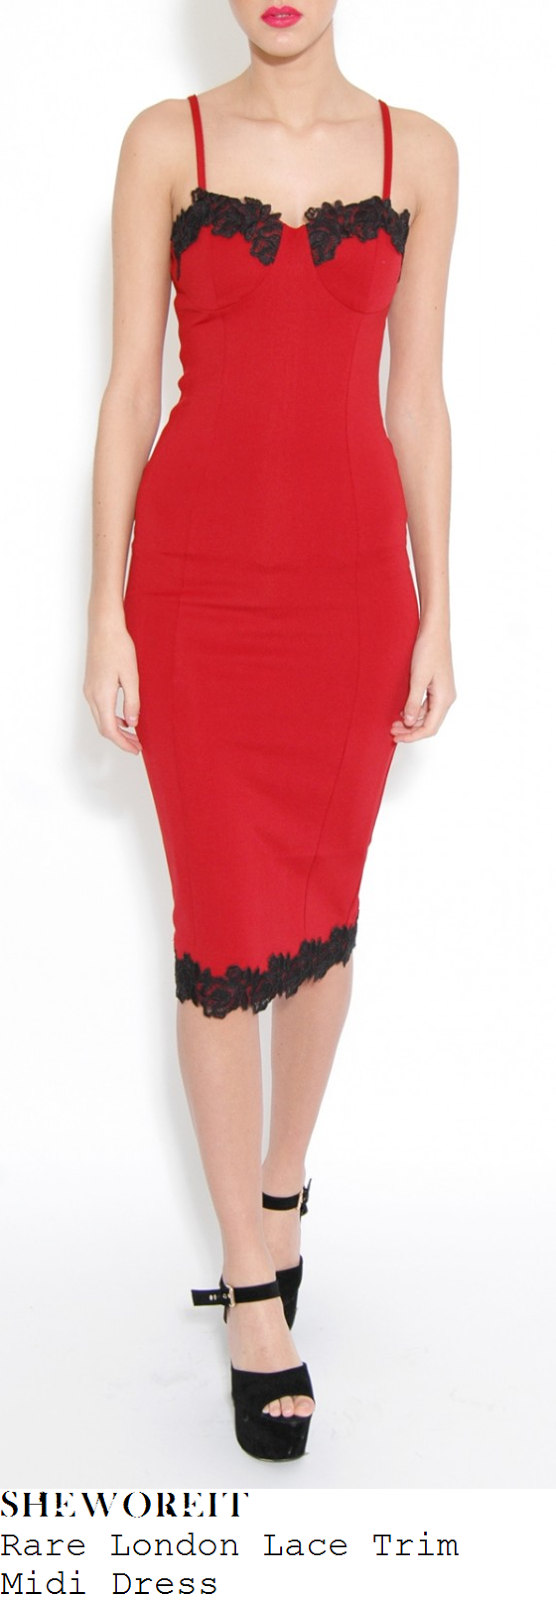 ferne-mccann-red-and-black-lace-sleeveless-midi-slip-dress